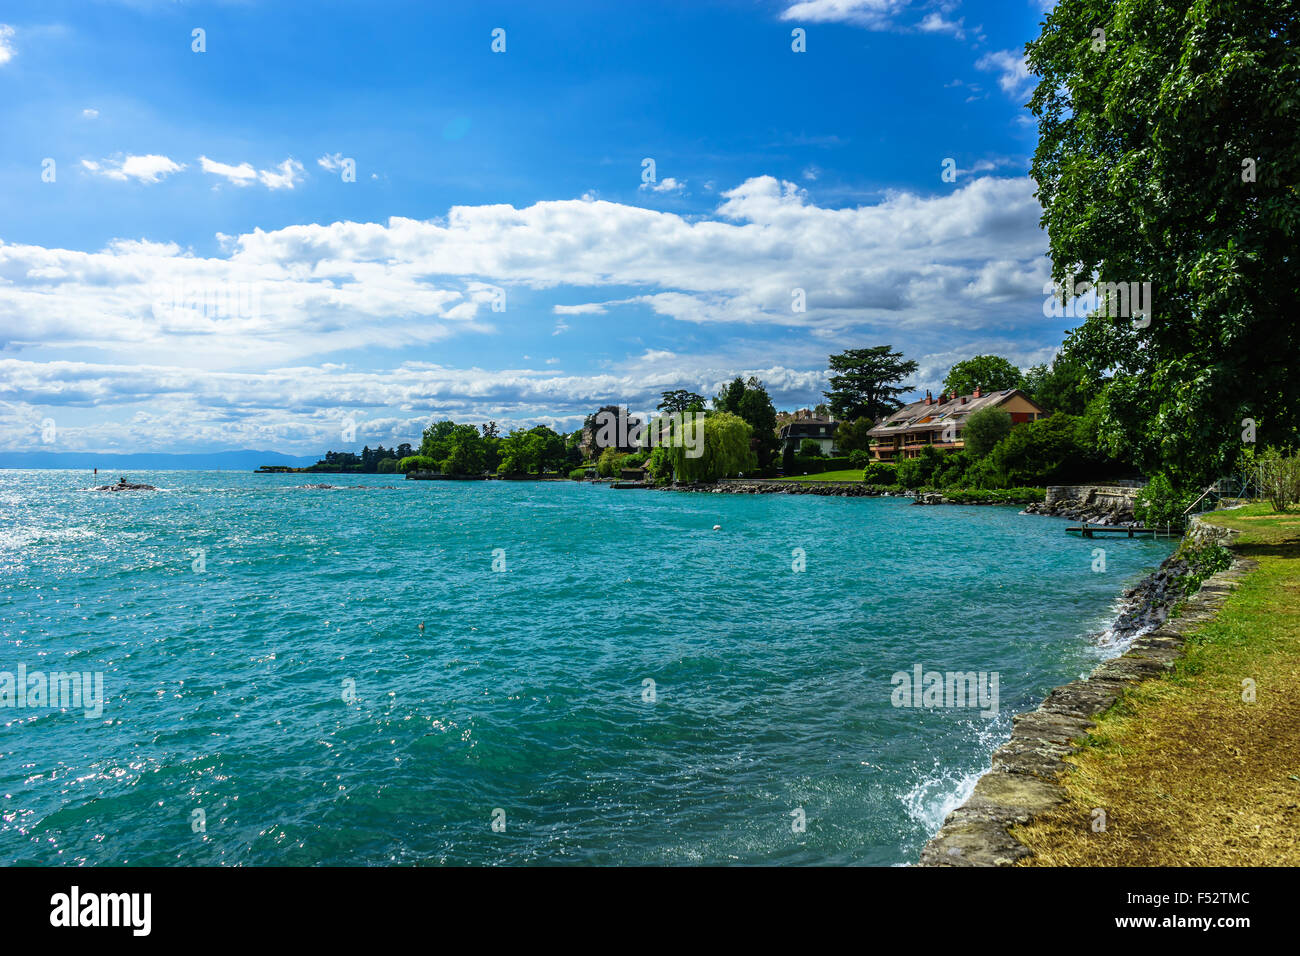 Summer on beautiful Lake Geneva. Lake Geneva, Switzerland Stock Photo